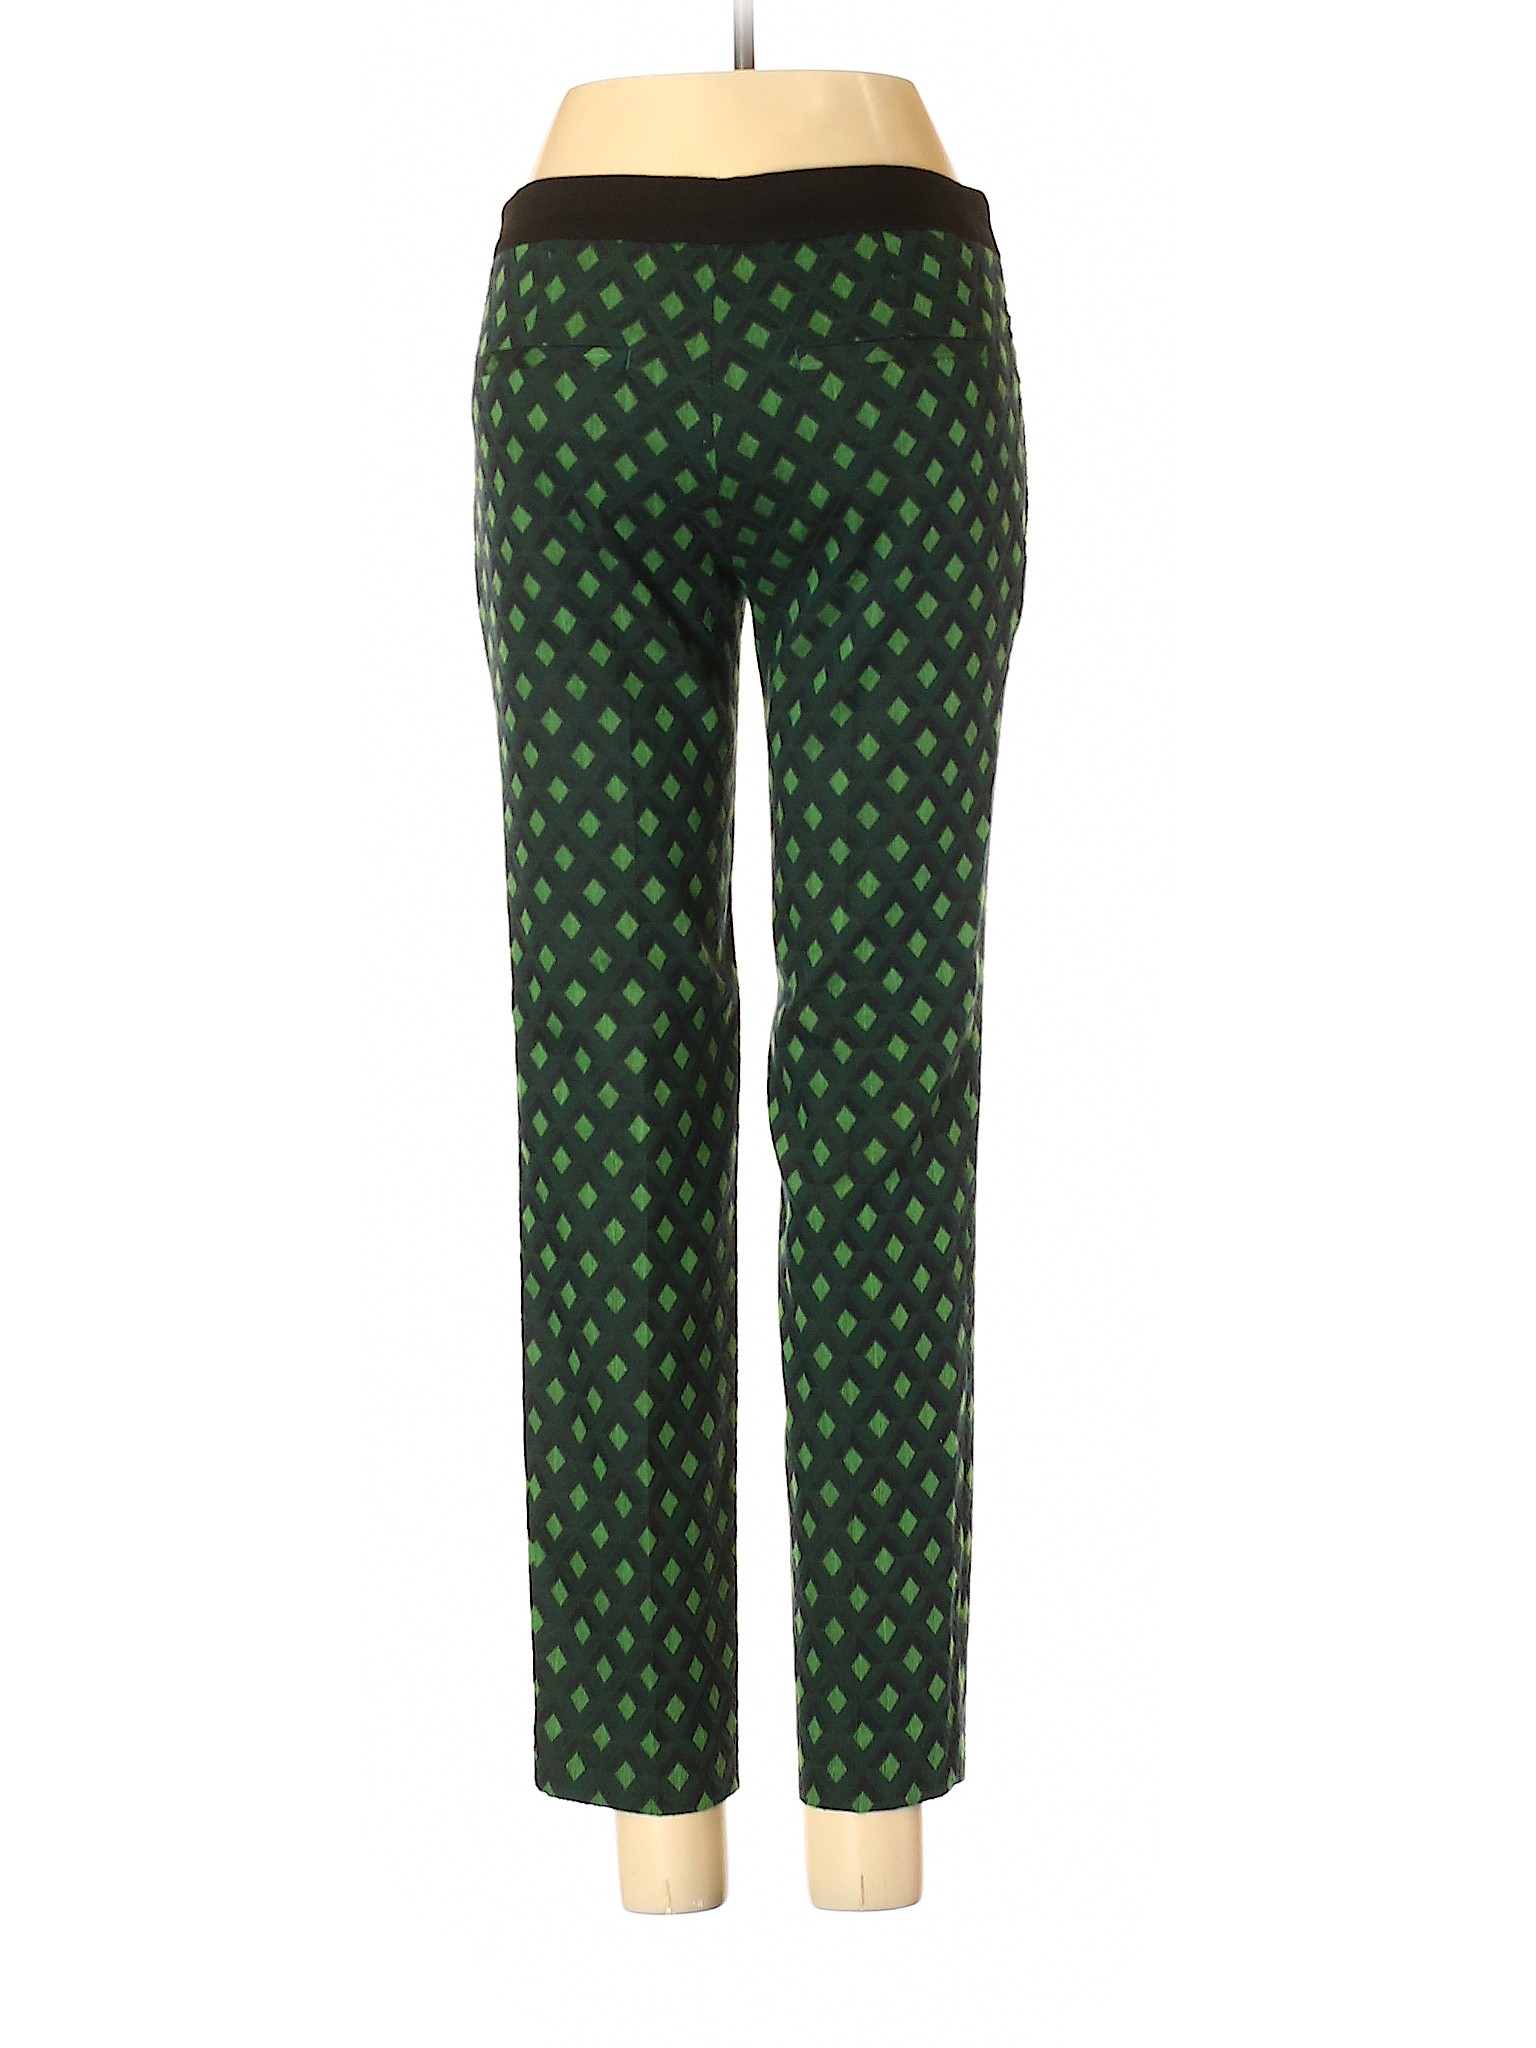 Zara Women Green Casual Pants XS | eBay